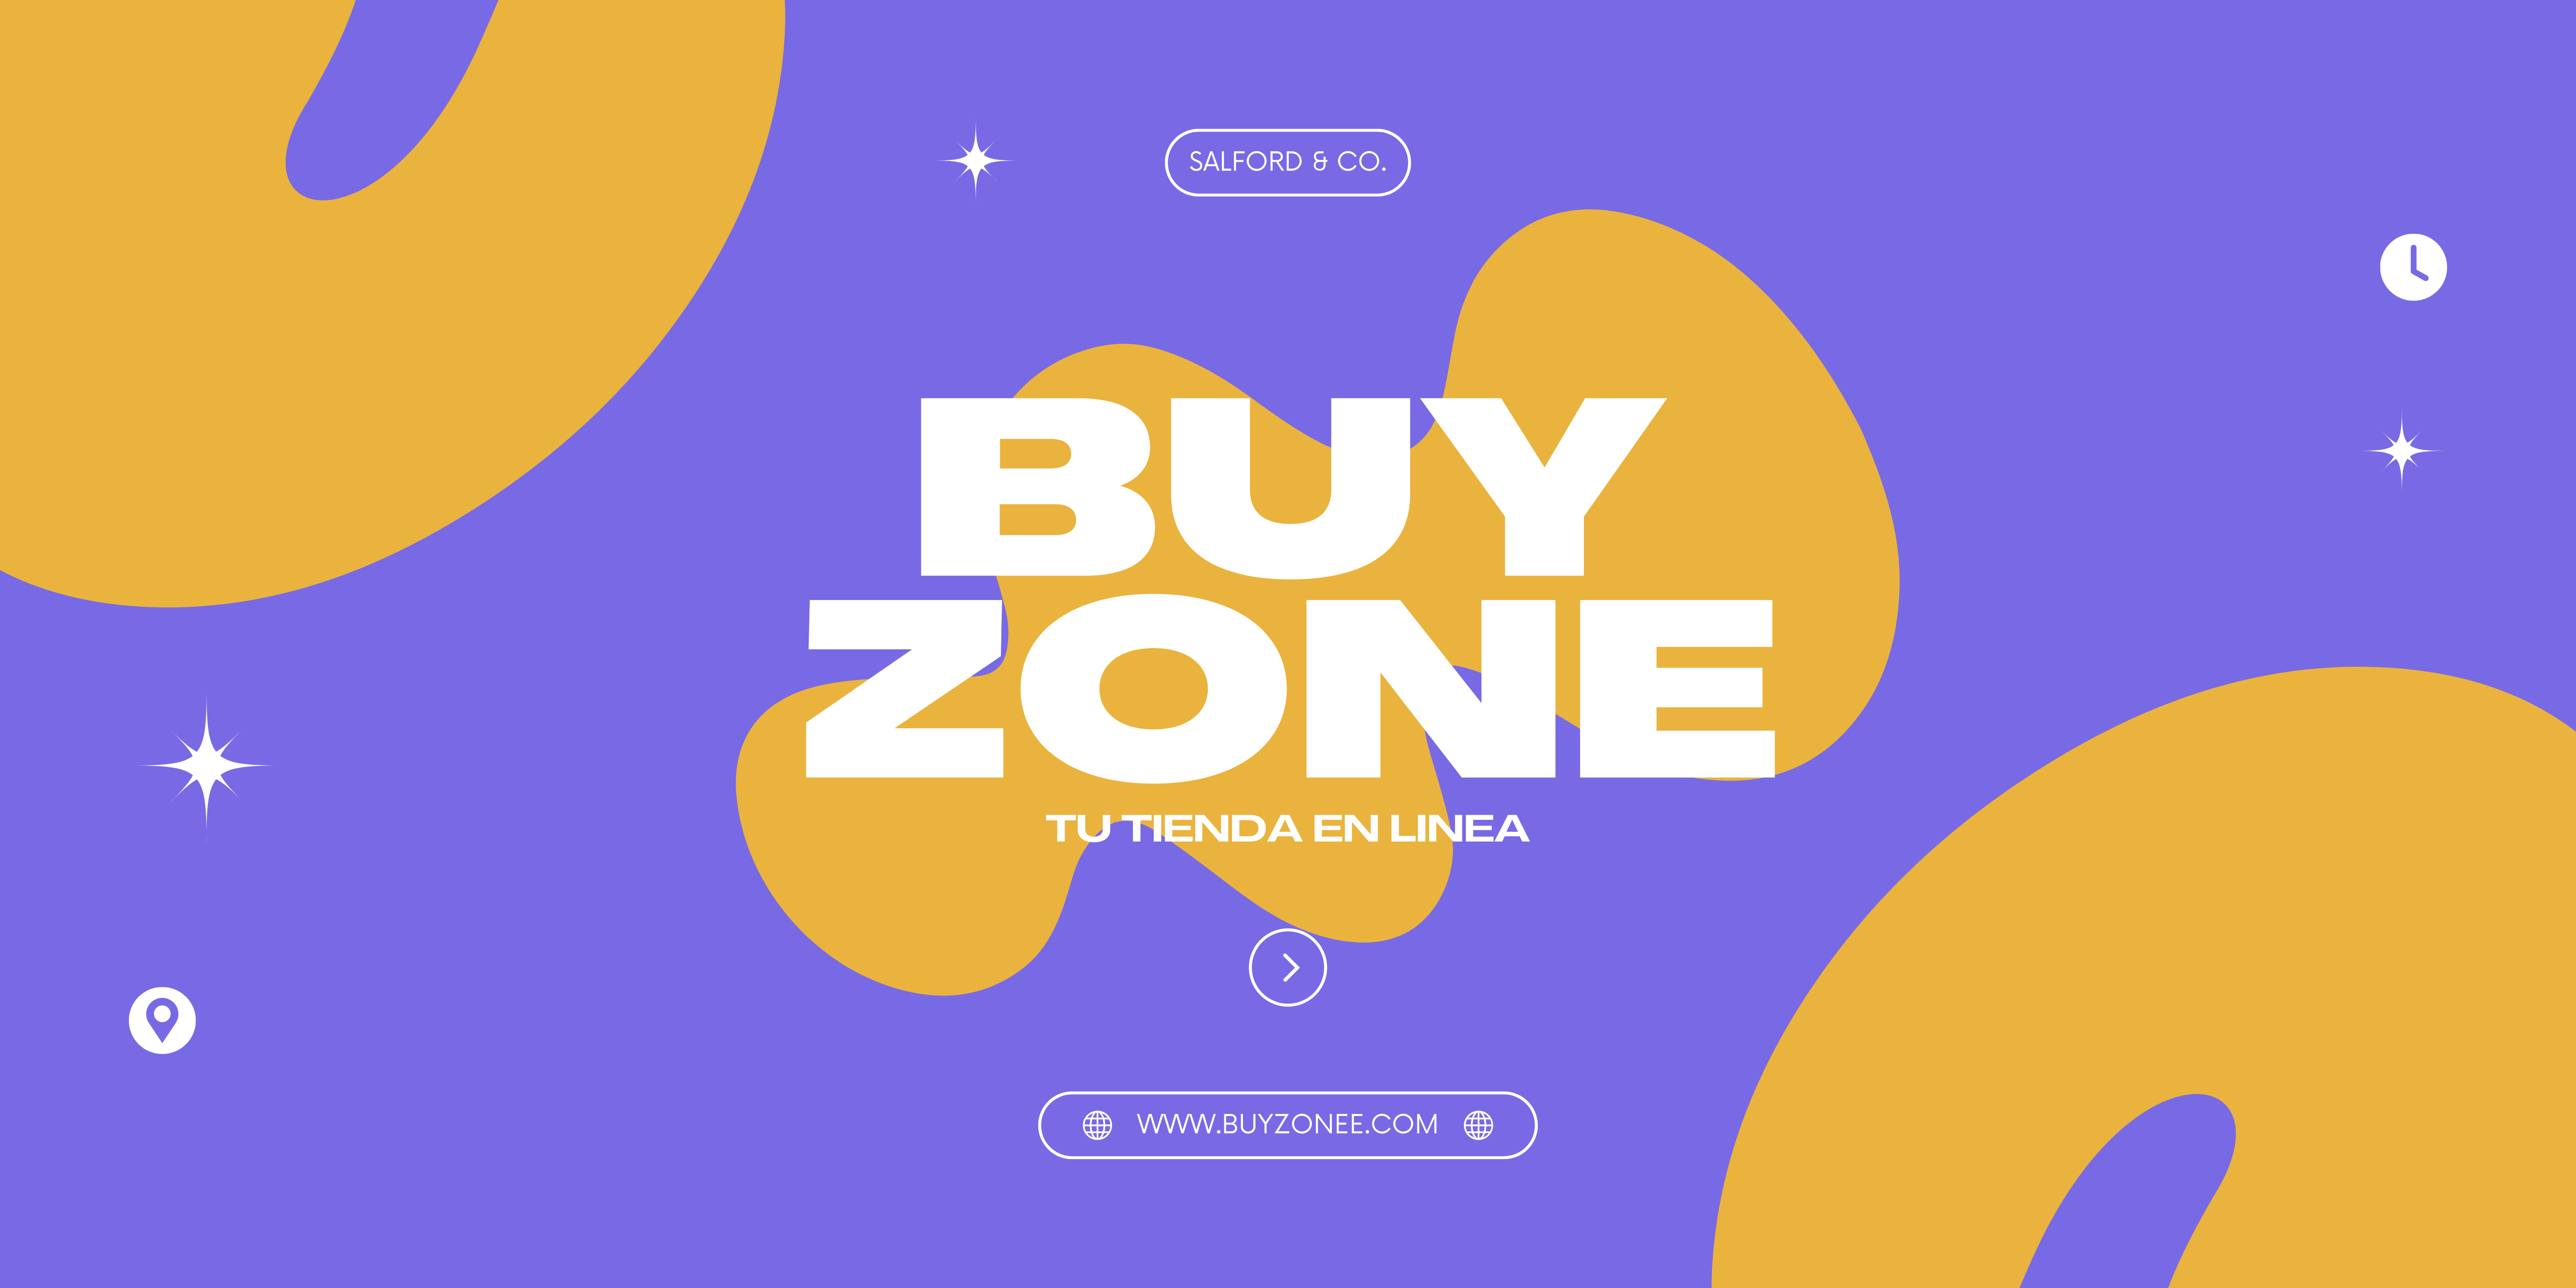 Buy Zonee promo